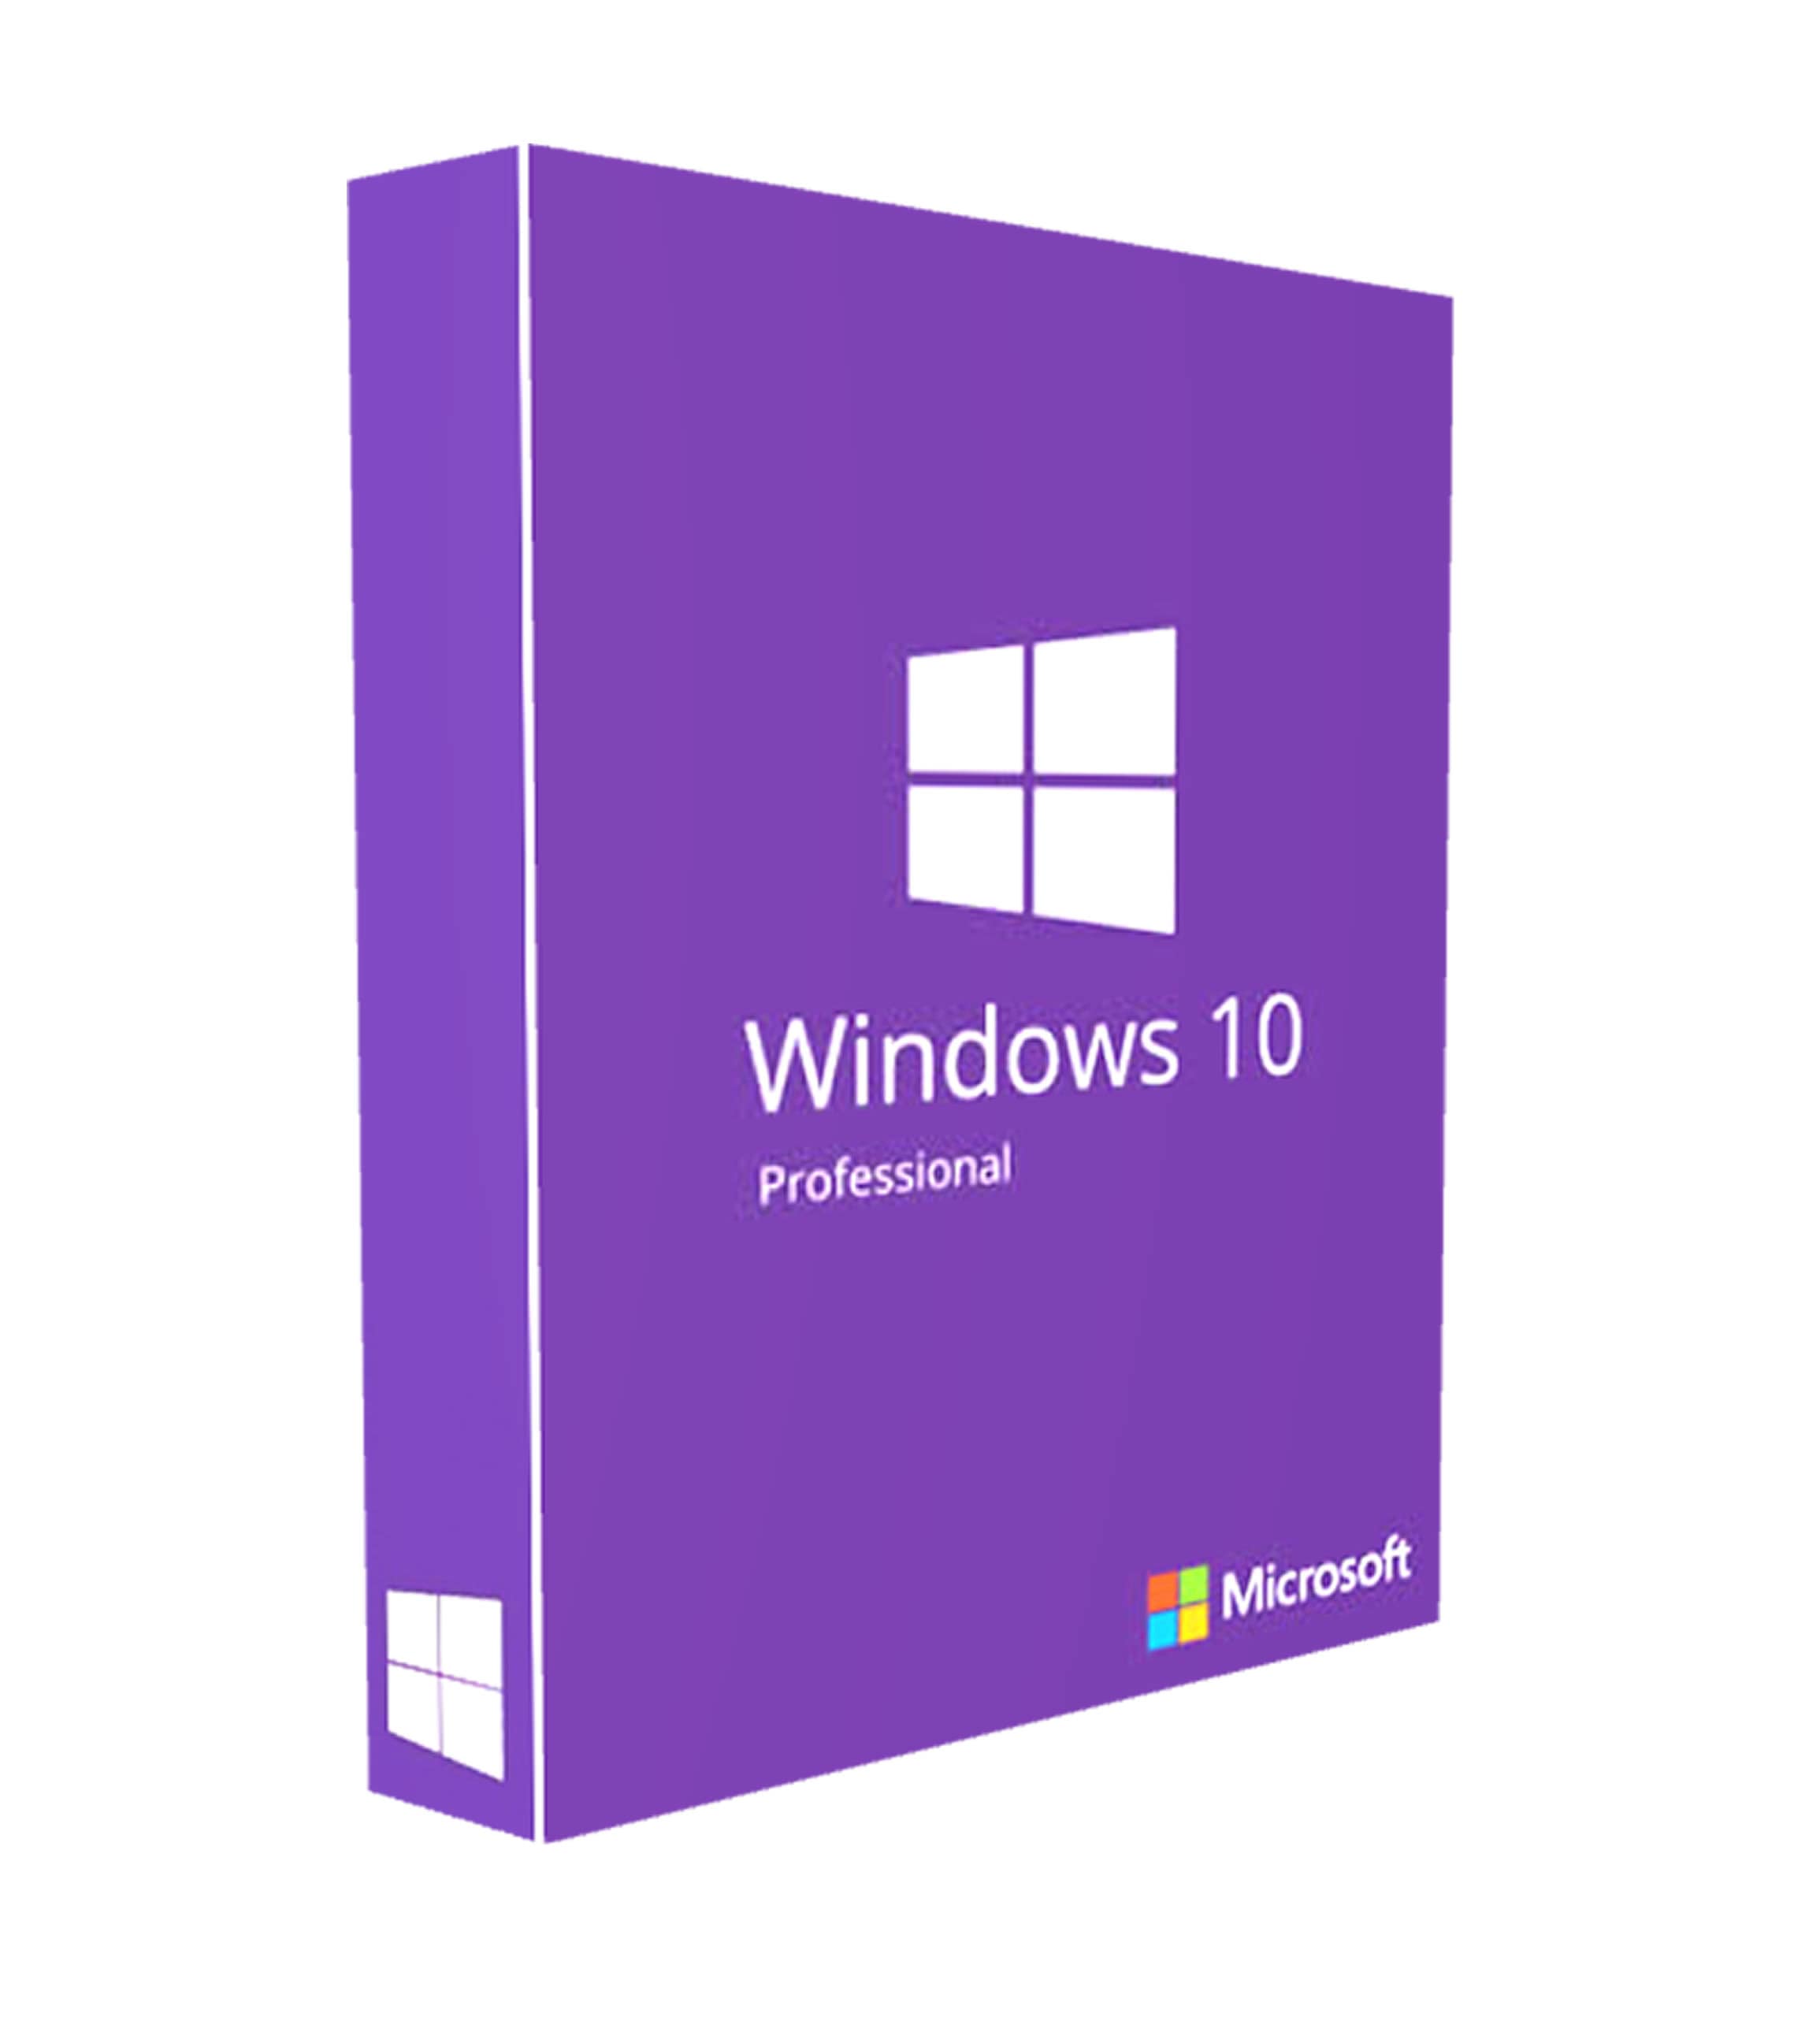 Windows 10 Professional - The Software Guru